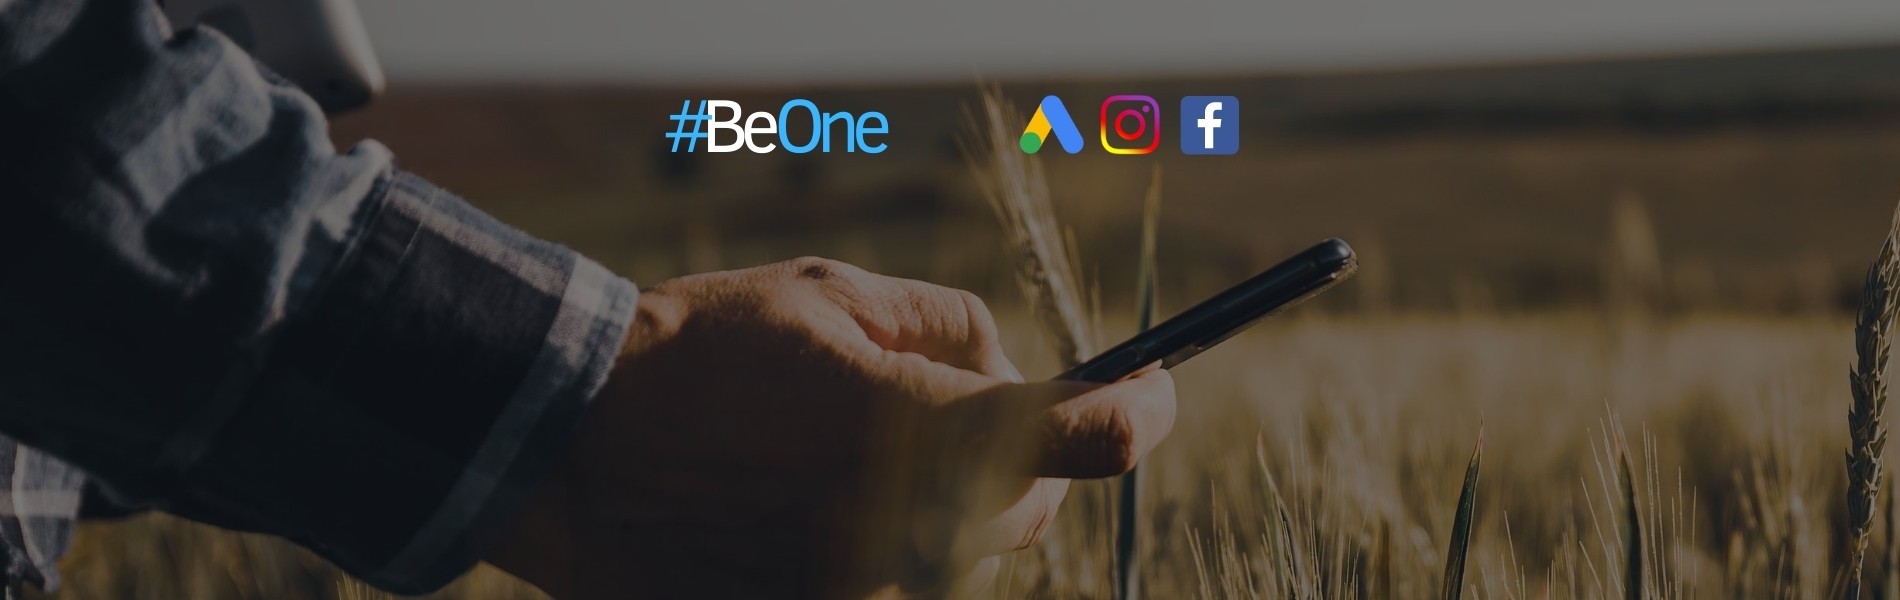 #BeOne - Agencia de Marketing agropecuario